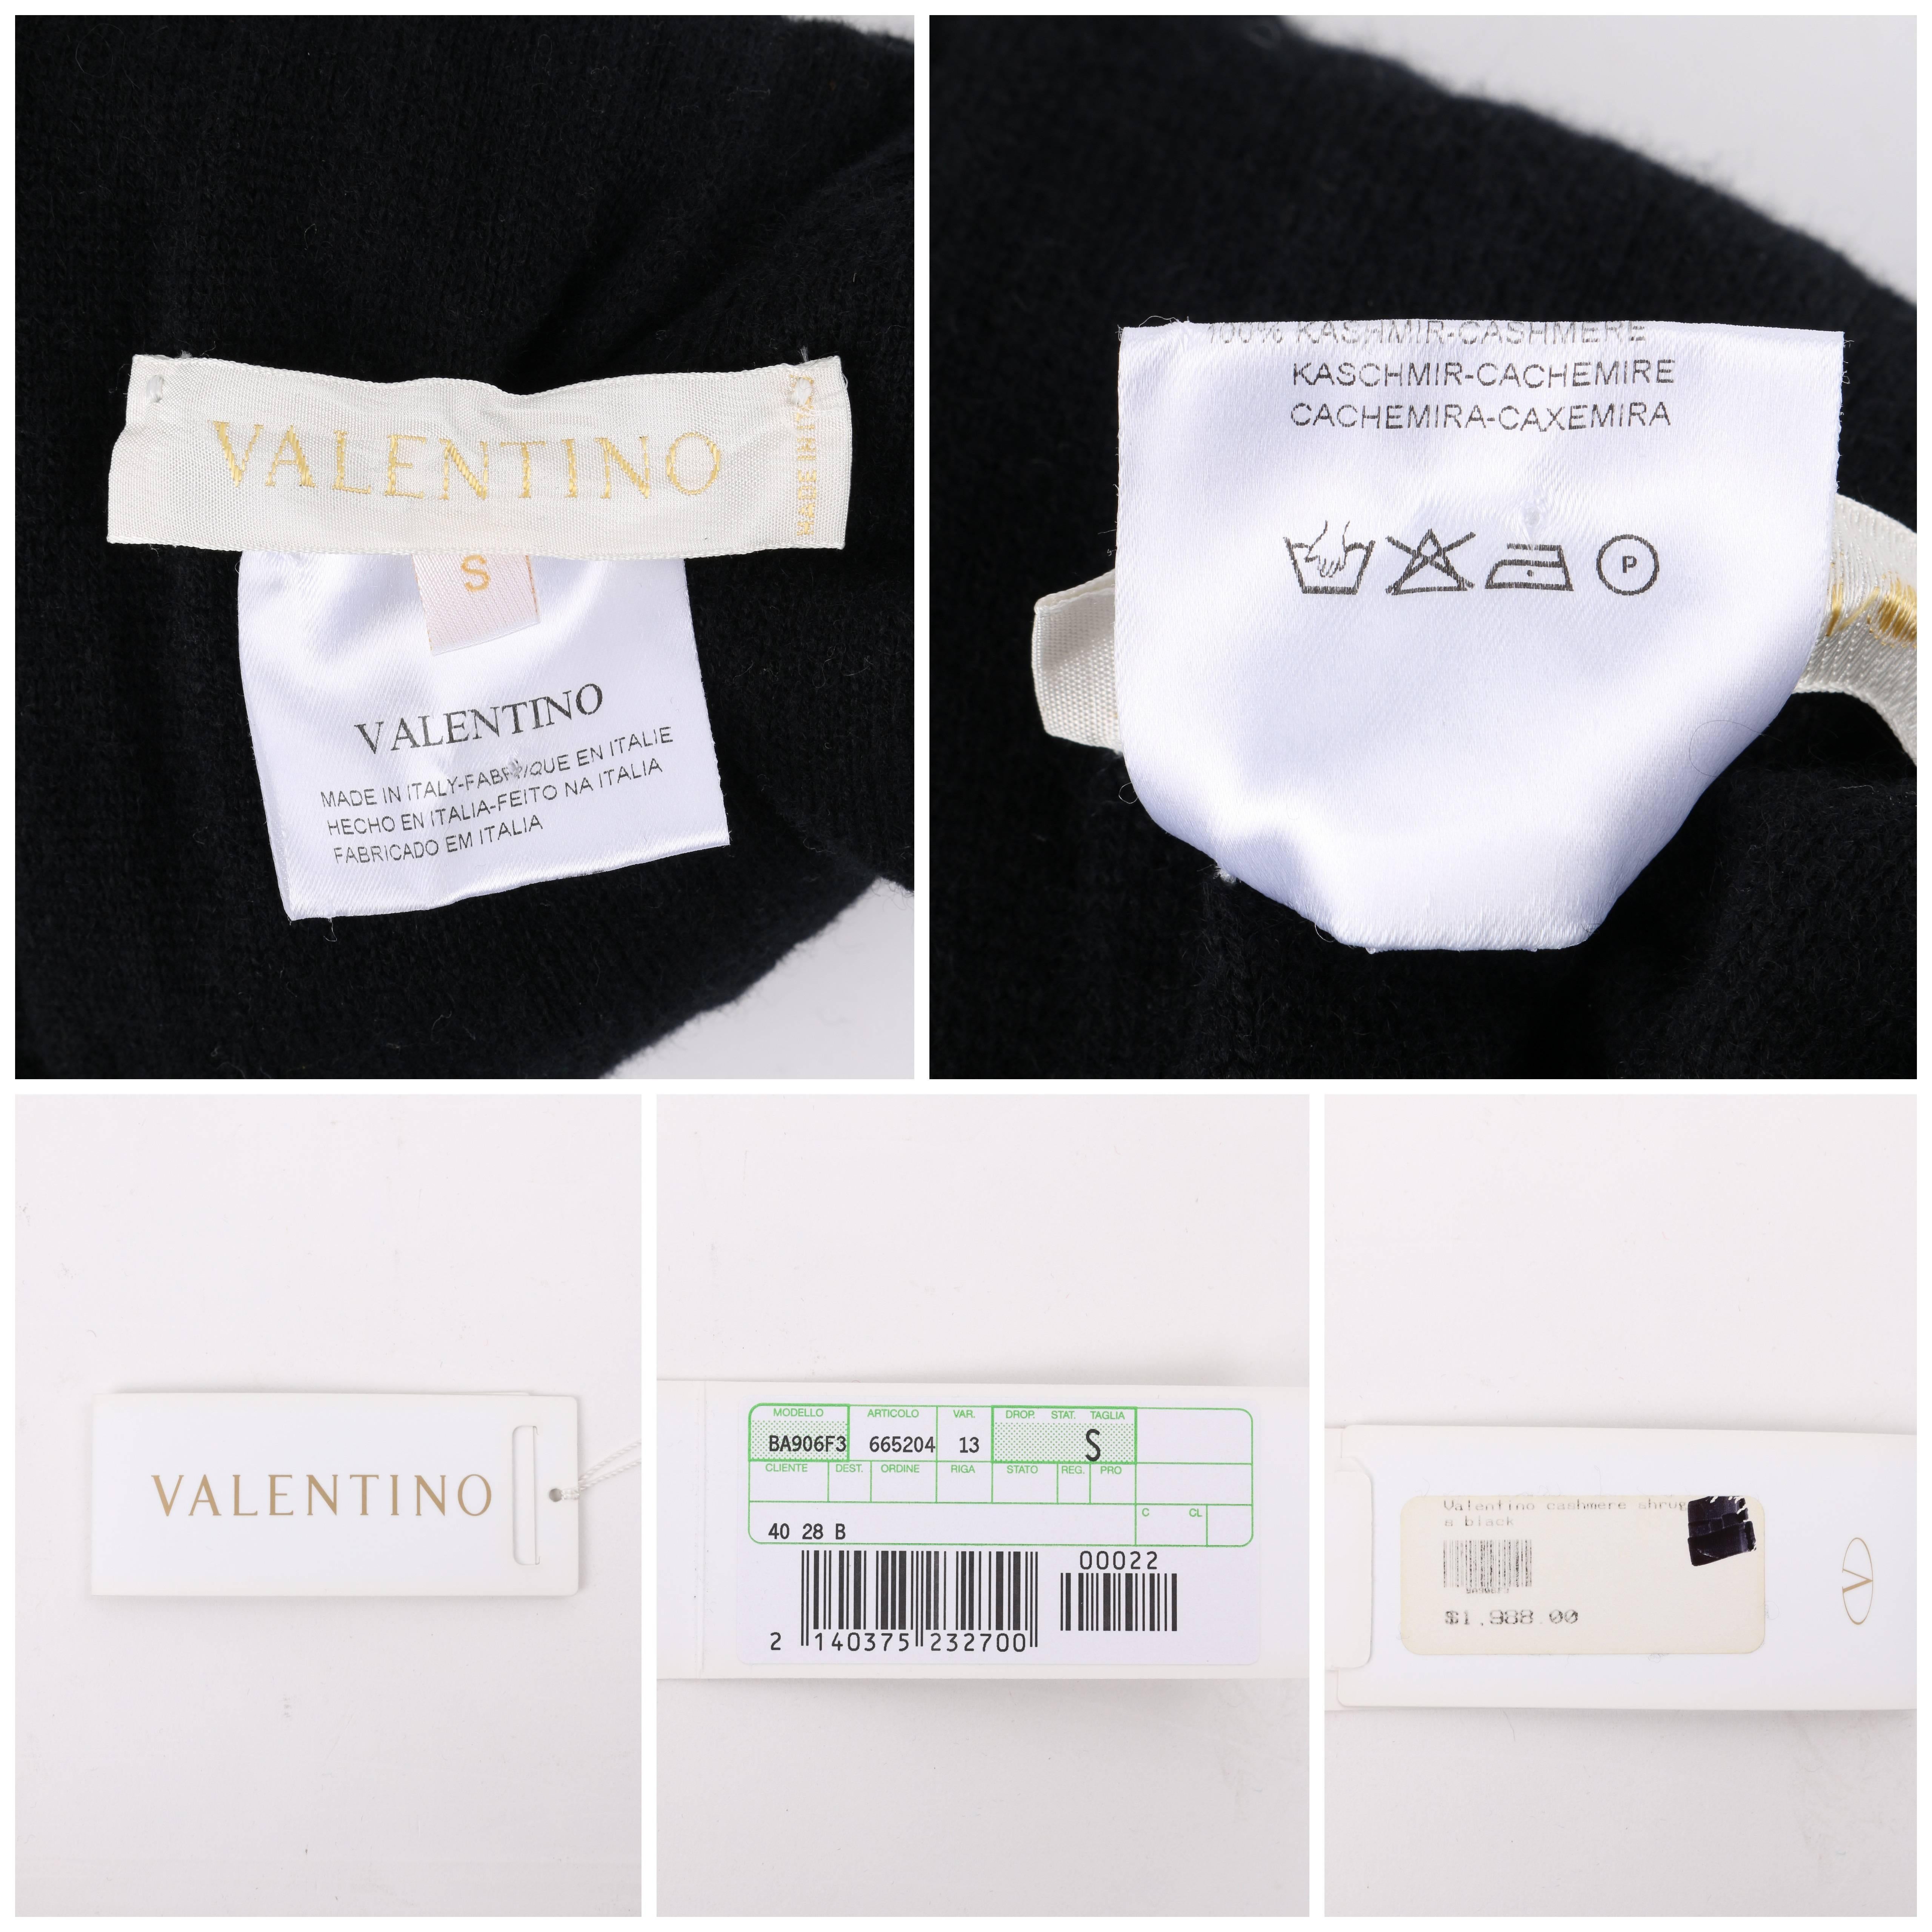 VALENTINO S/S 2006 Black Cashmere Knit Bow Shrug NWT 3